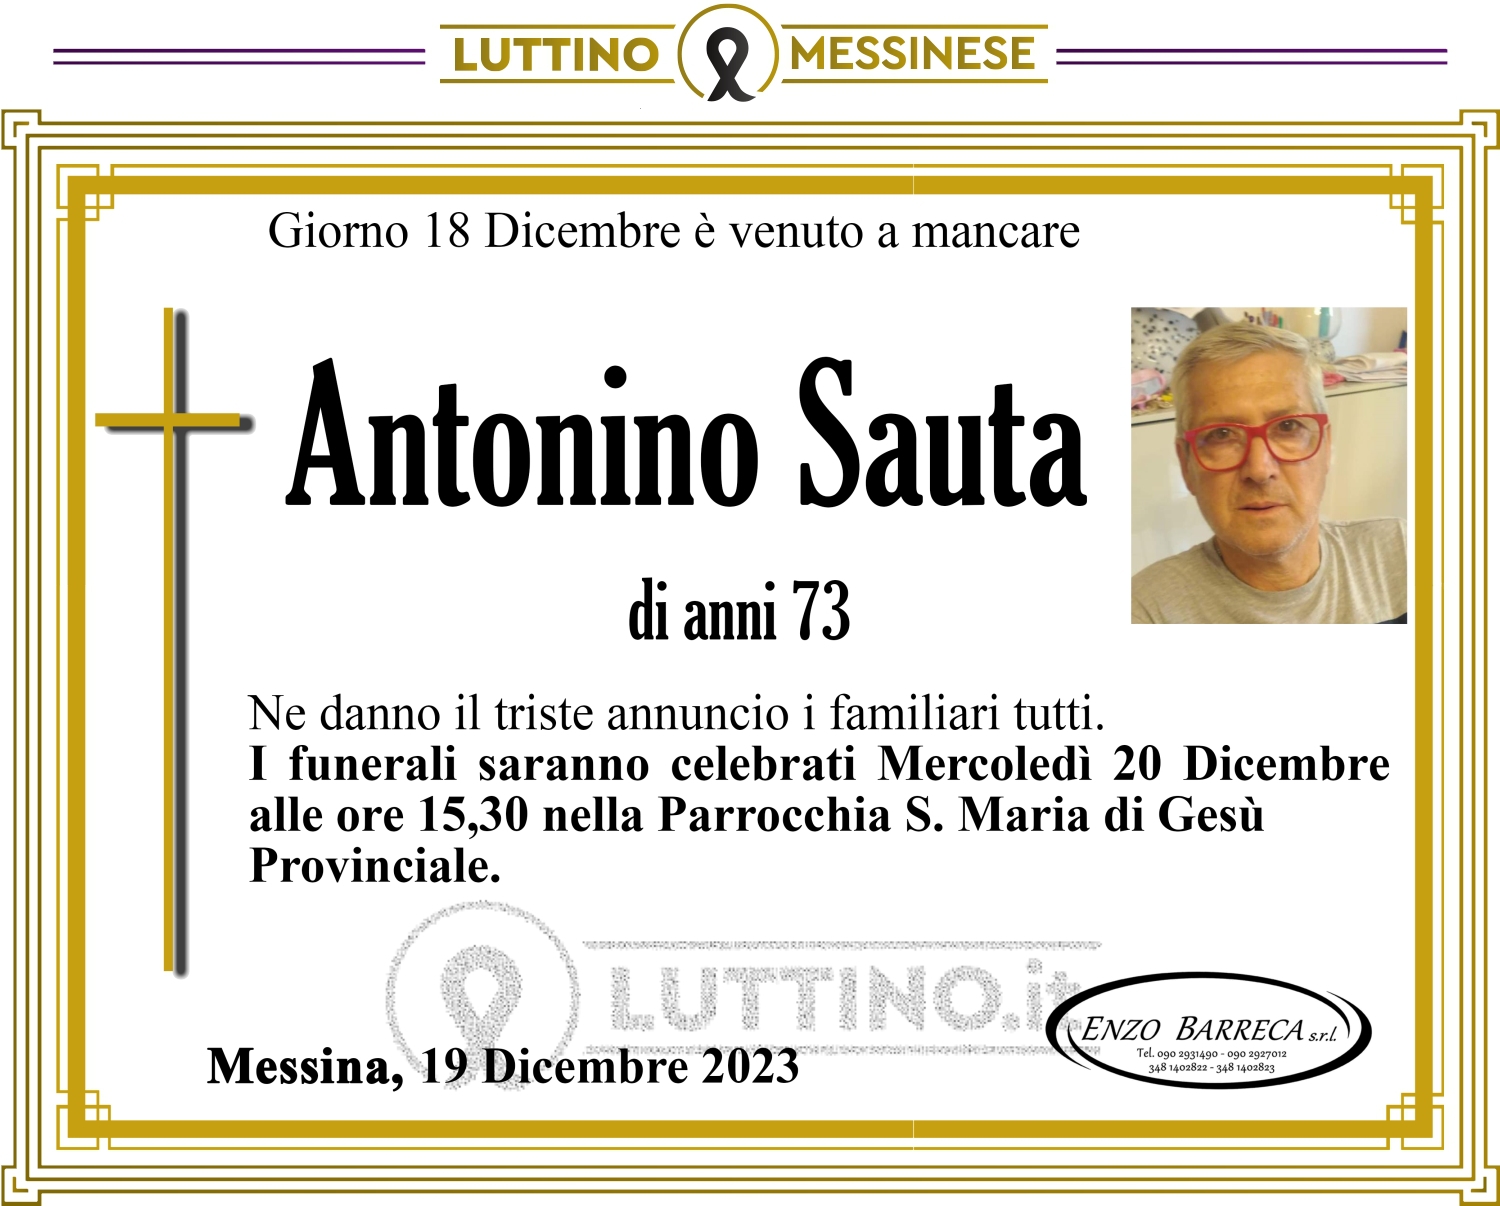 Antonino Sauta